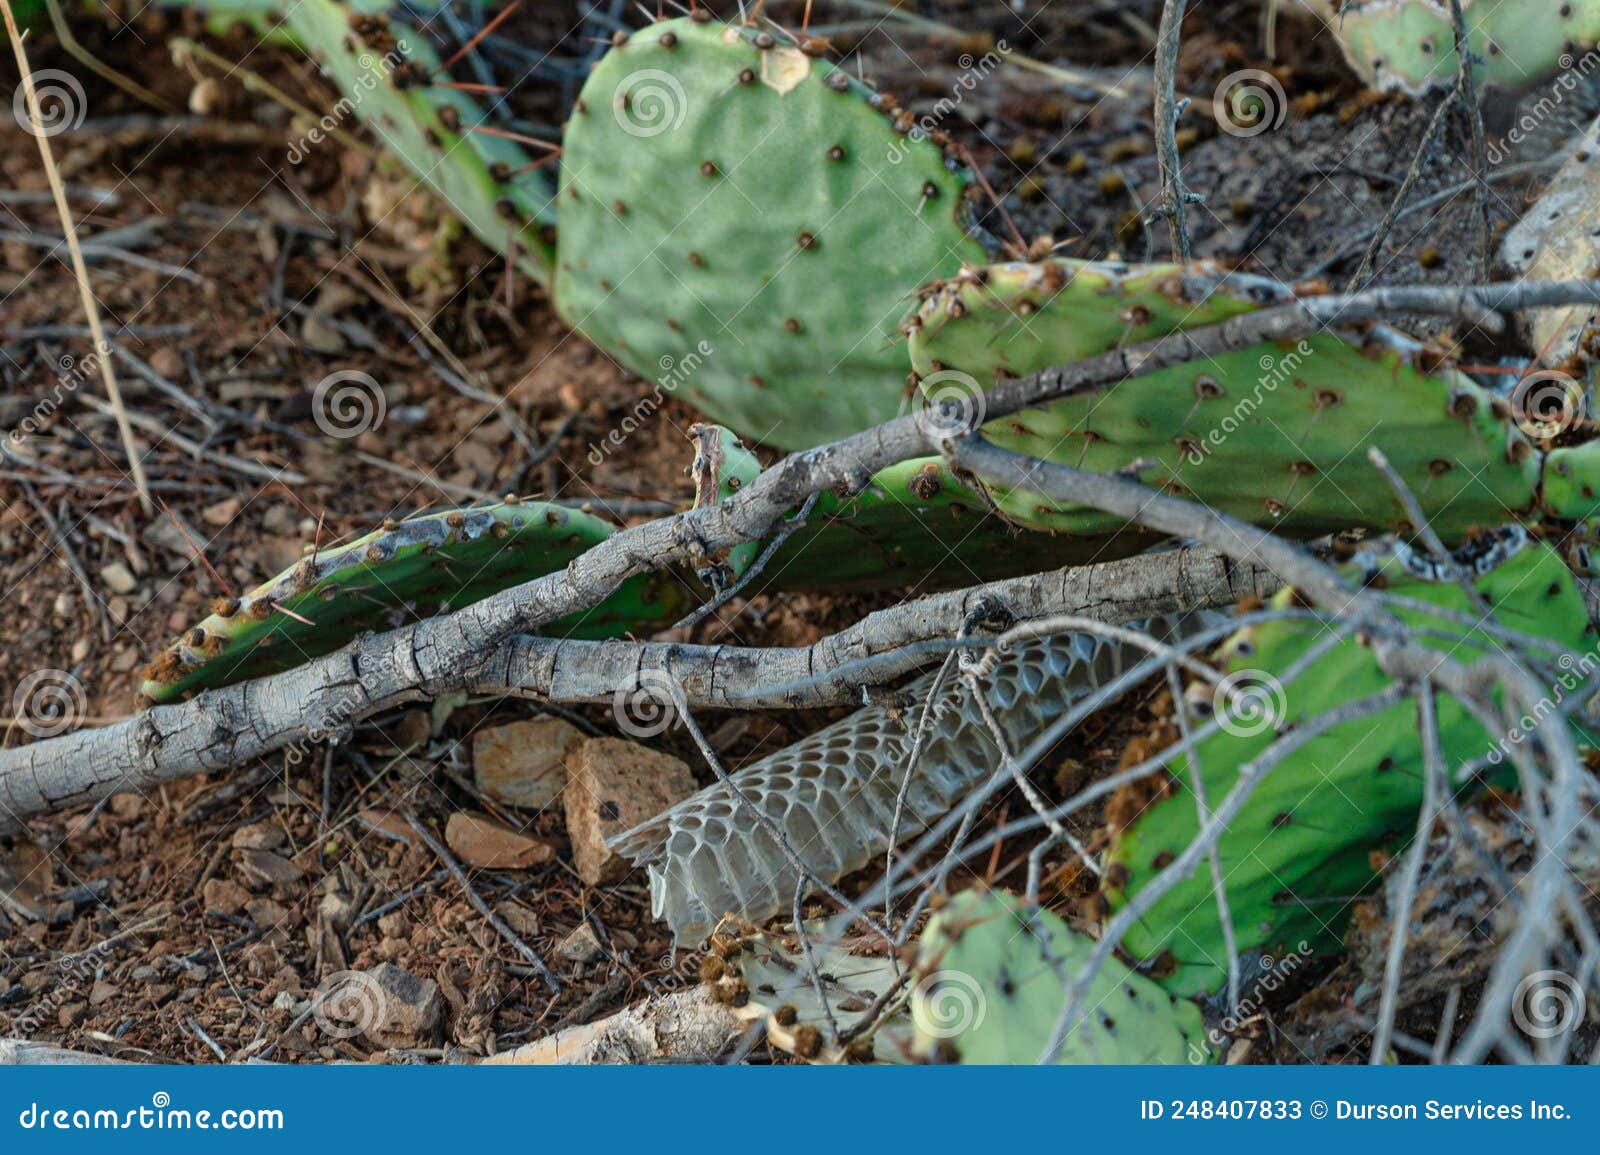 shedded rattlesnake skin underneath a cactus